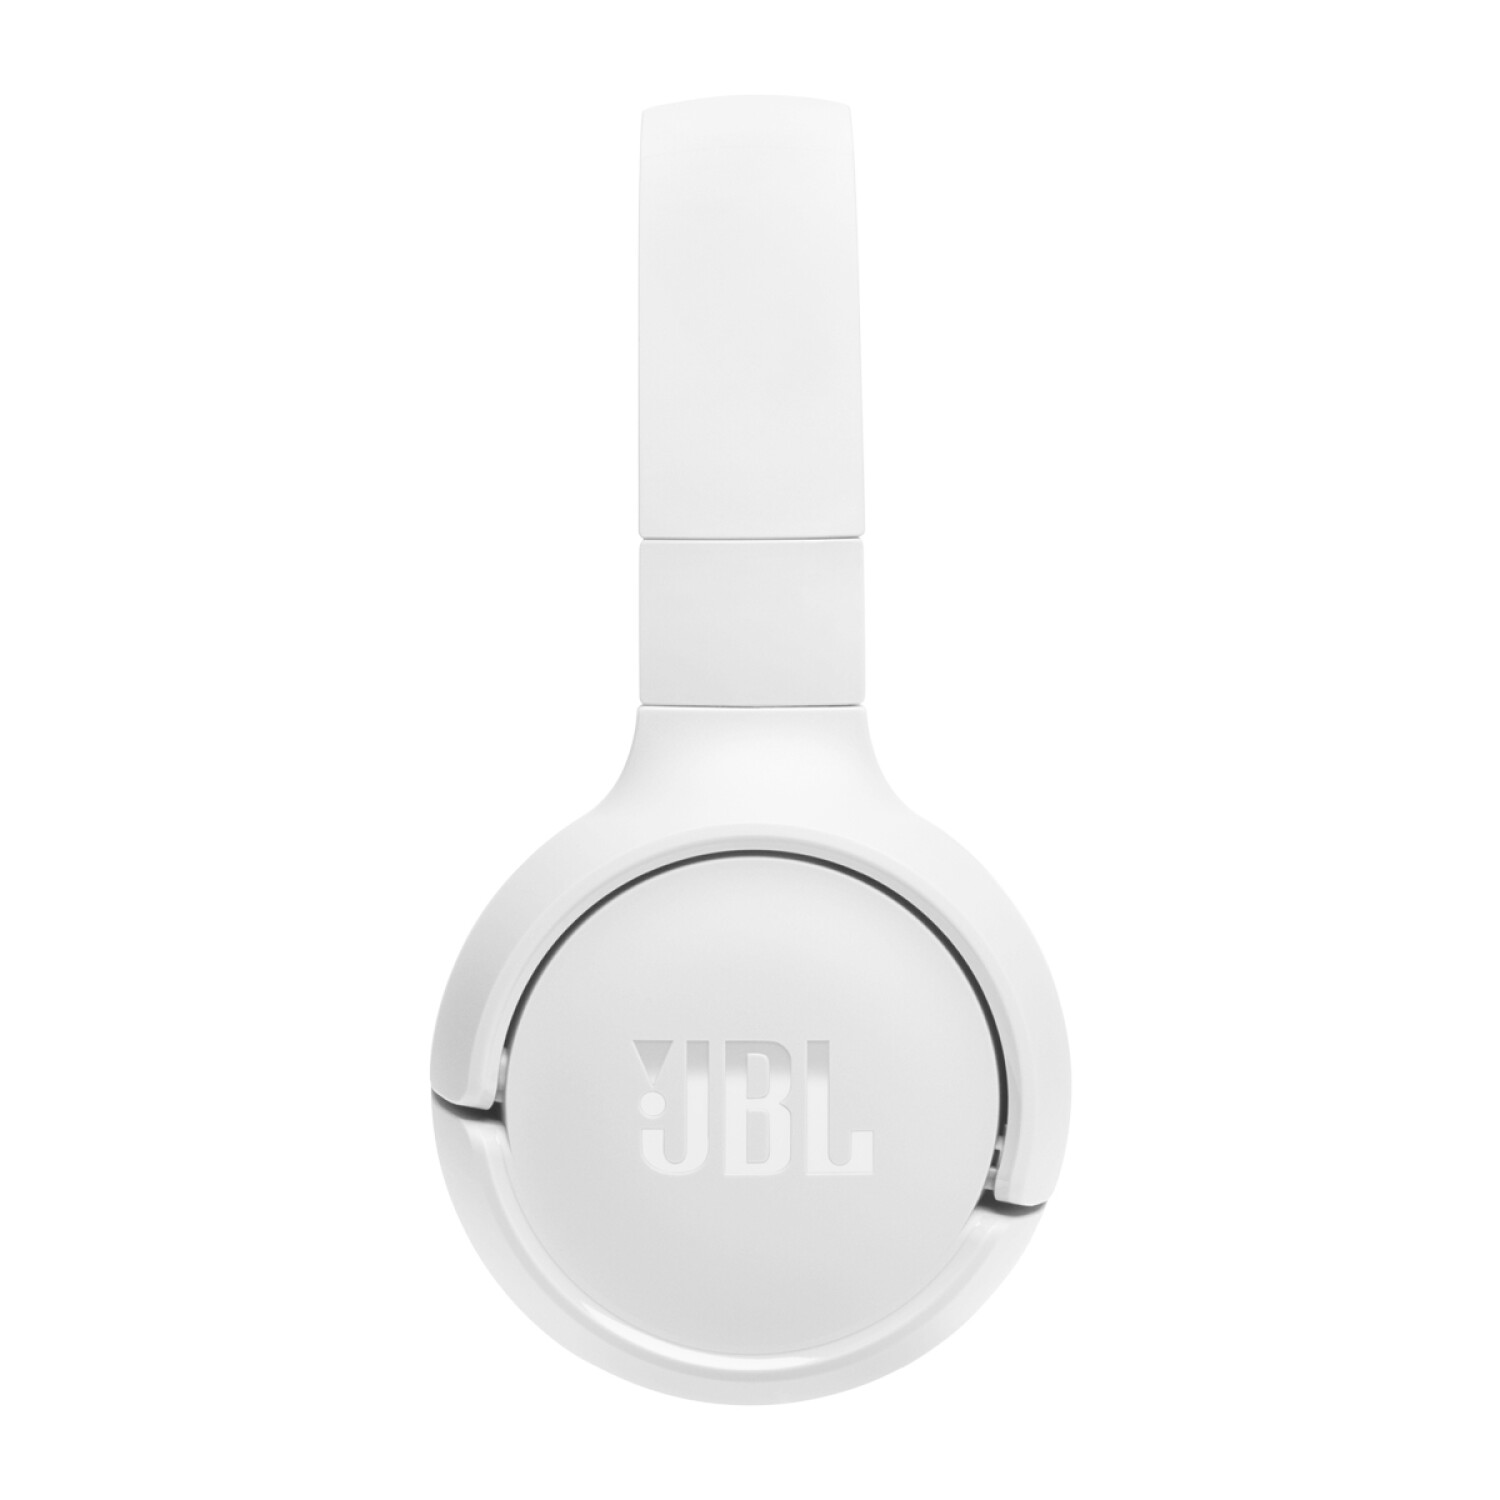 JBL Tune 520BT Auriculares Inalámbricos por Bluetooth